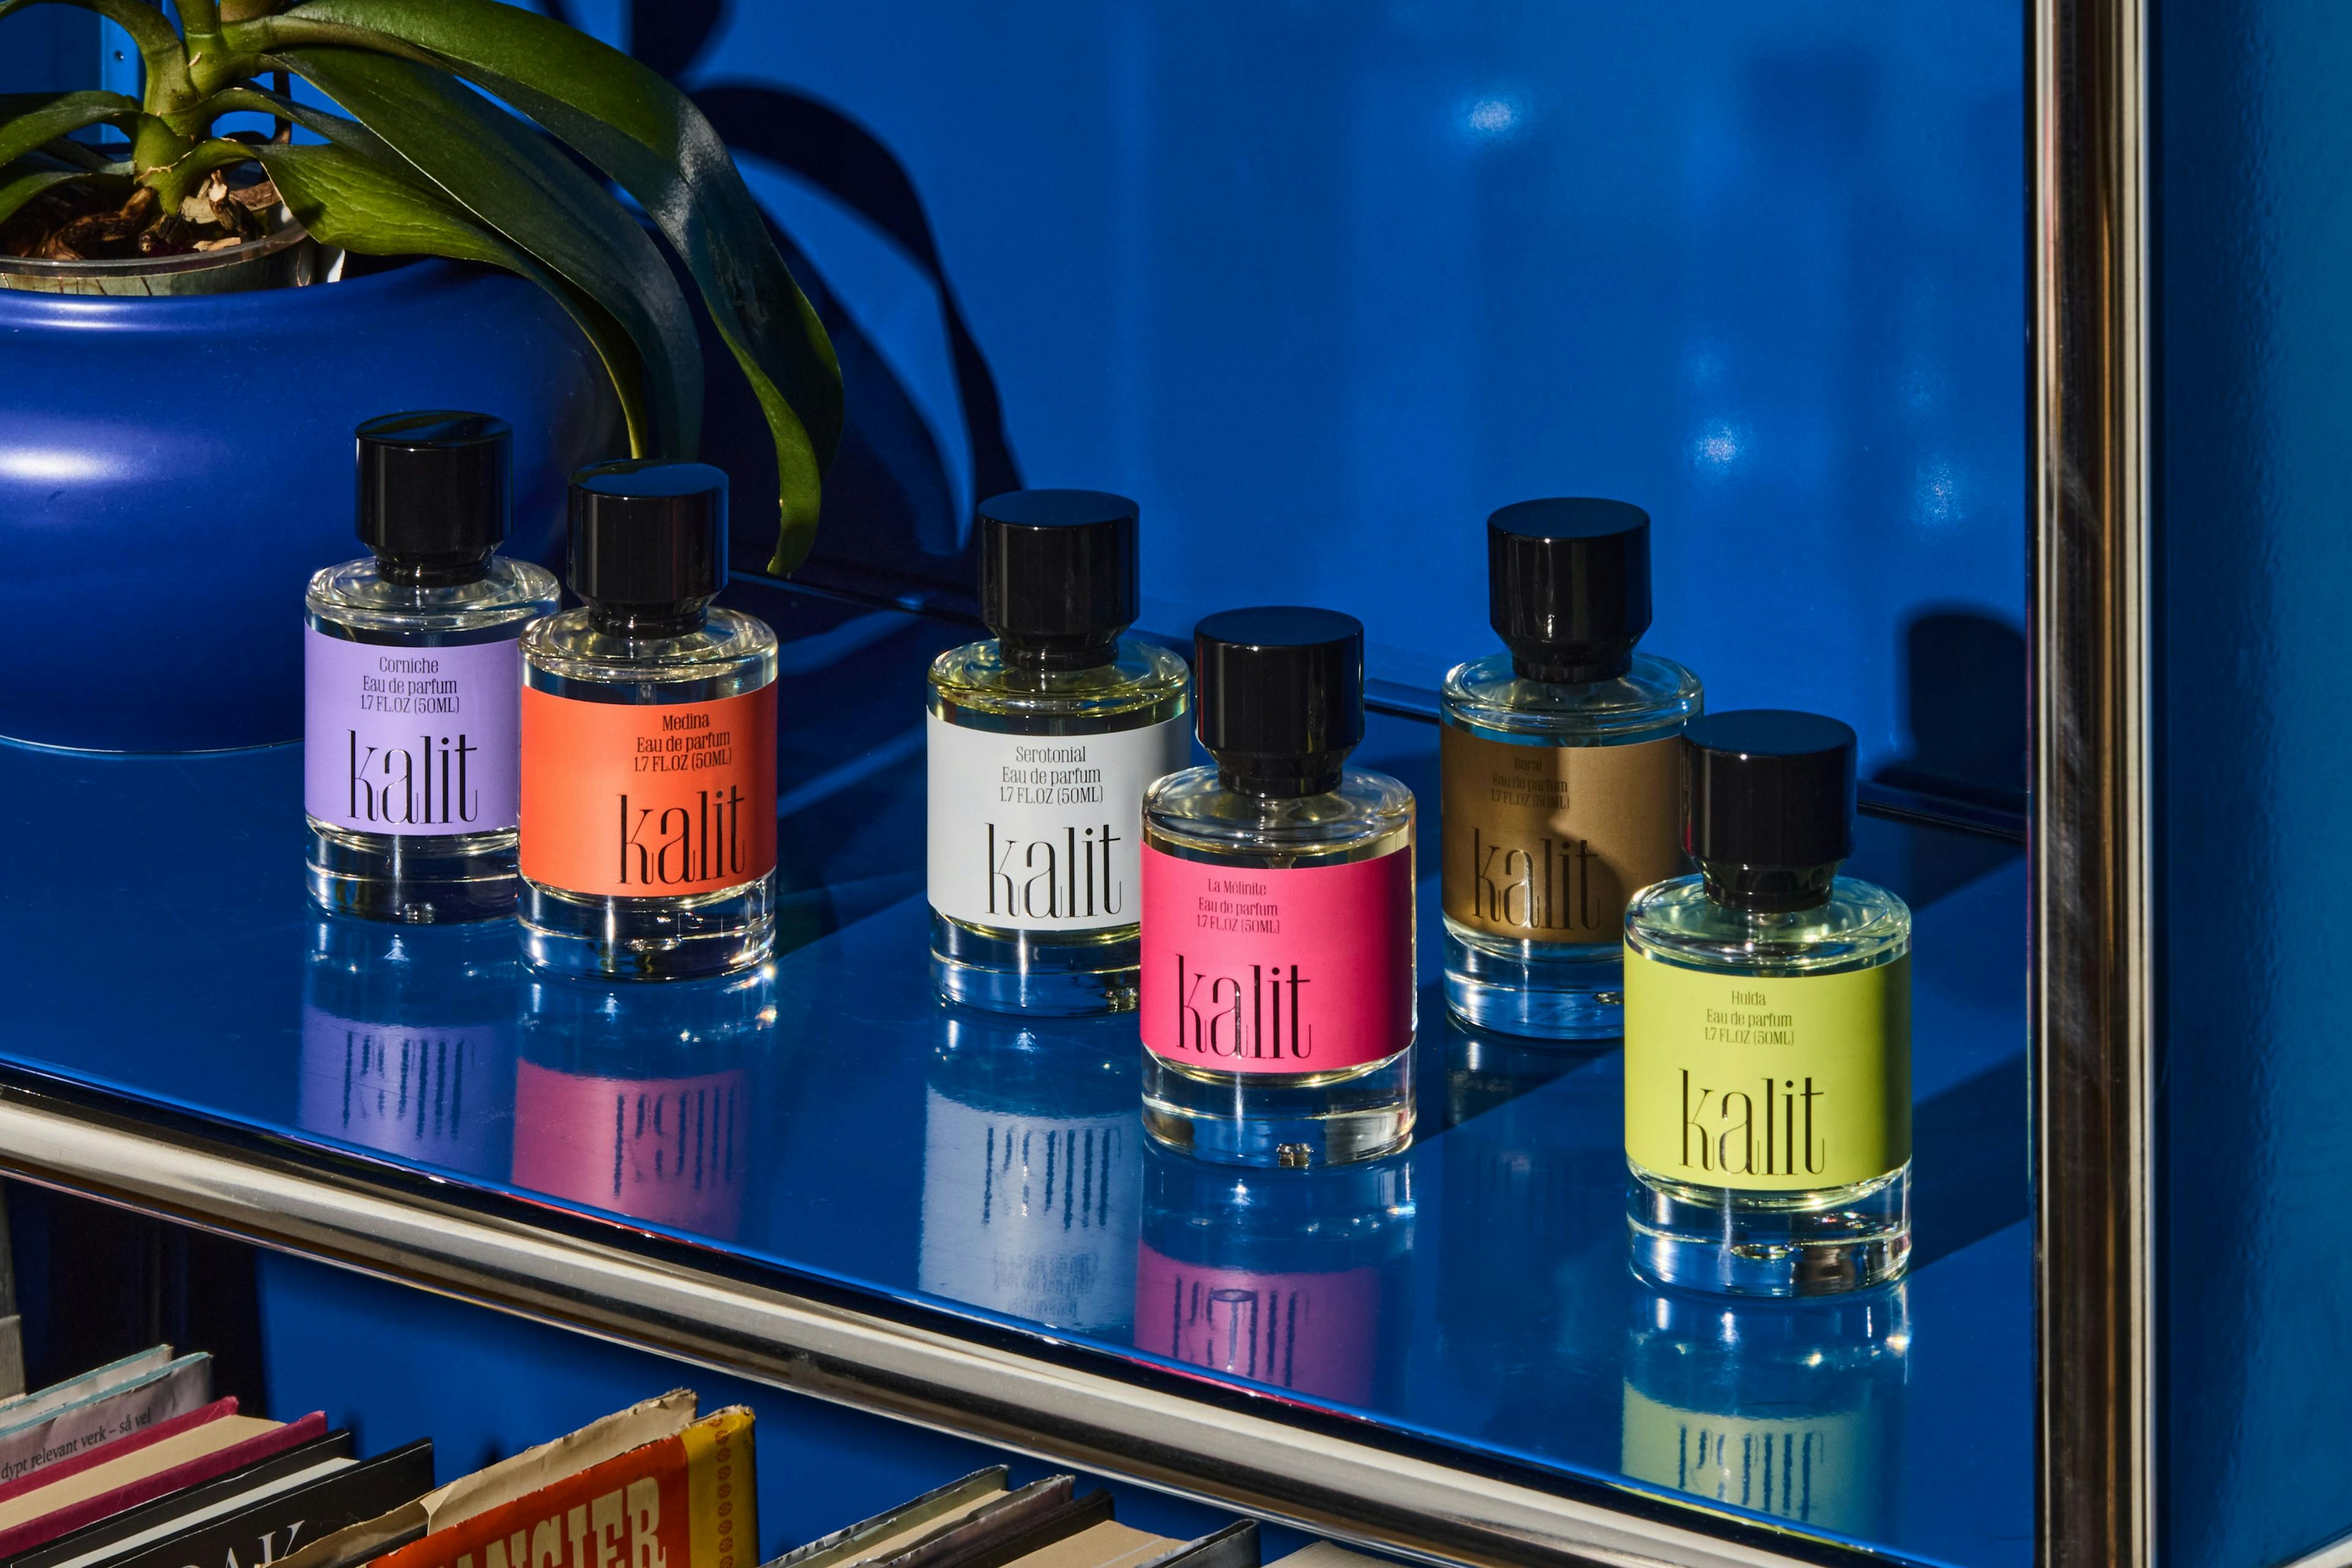 Six fragrances by Kalit, bottles